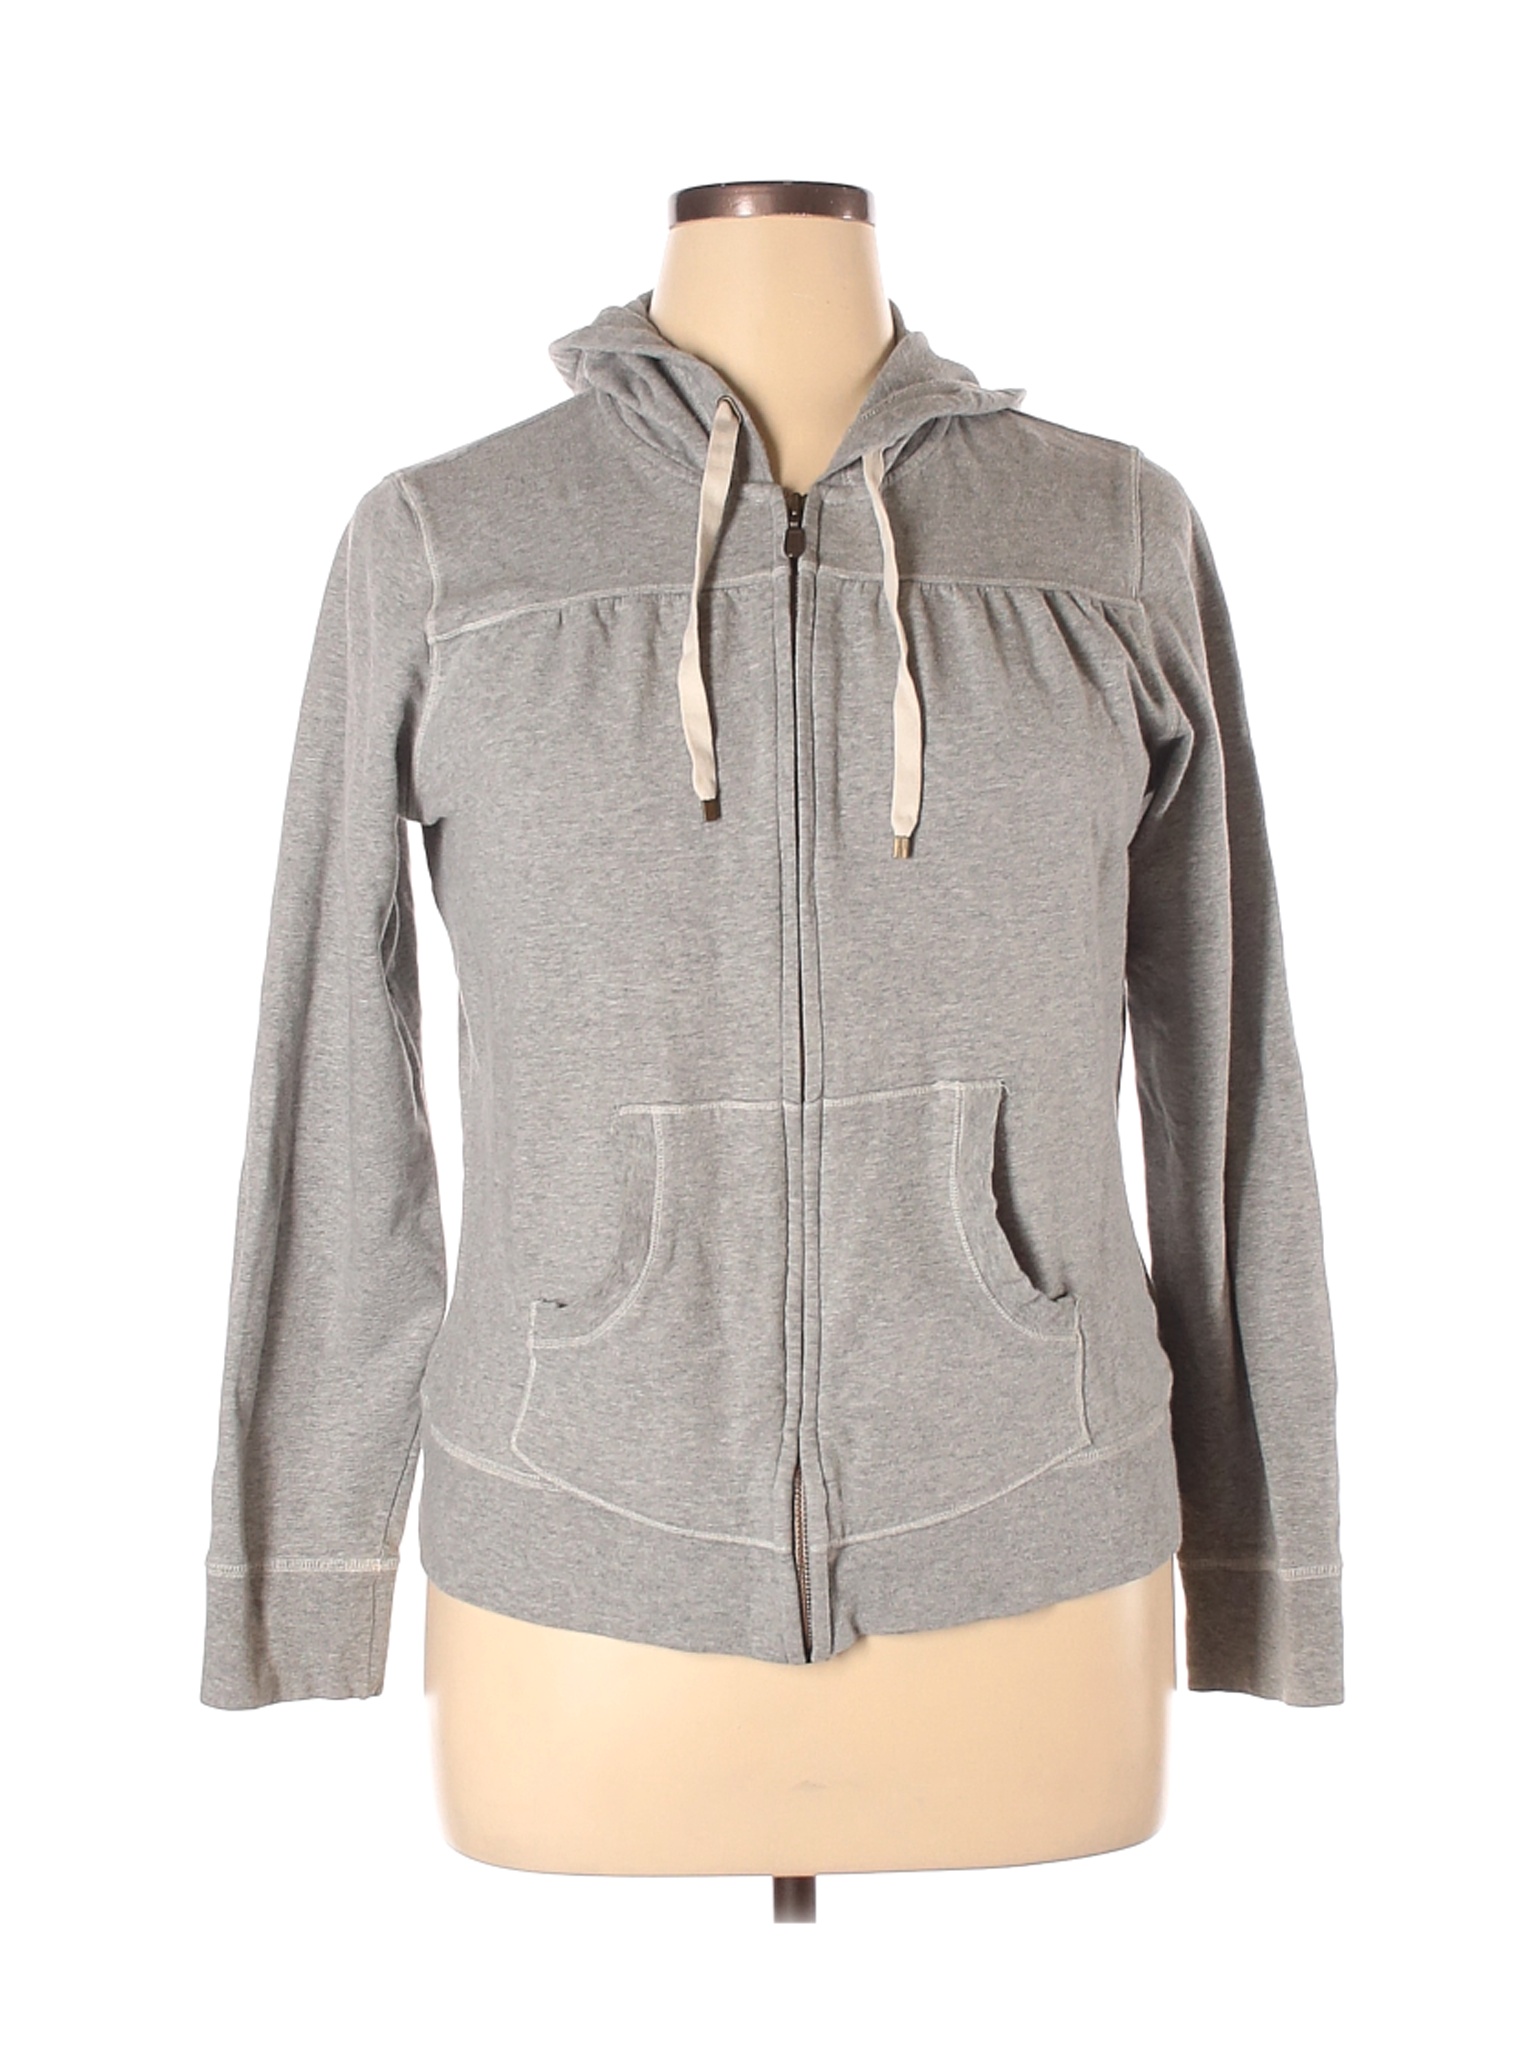 Gap Body Women Gray Zip Up Hoodie XL | eBay